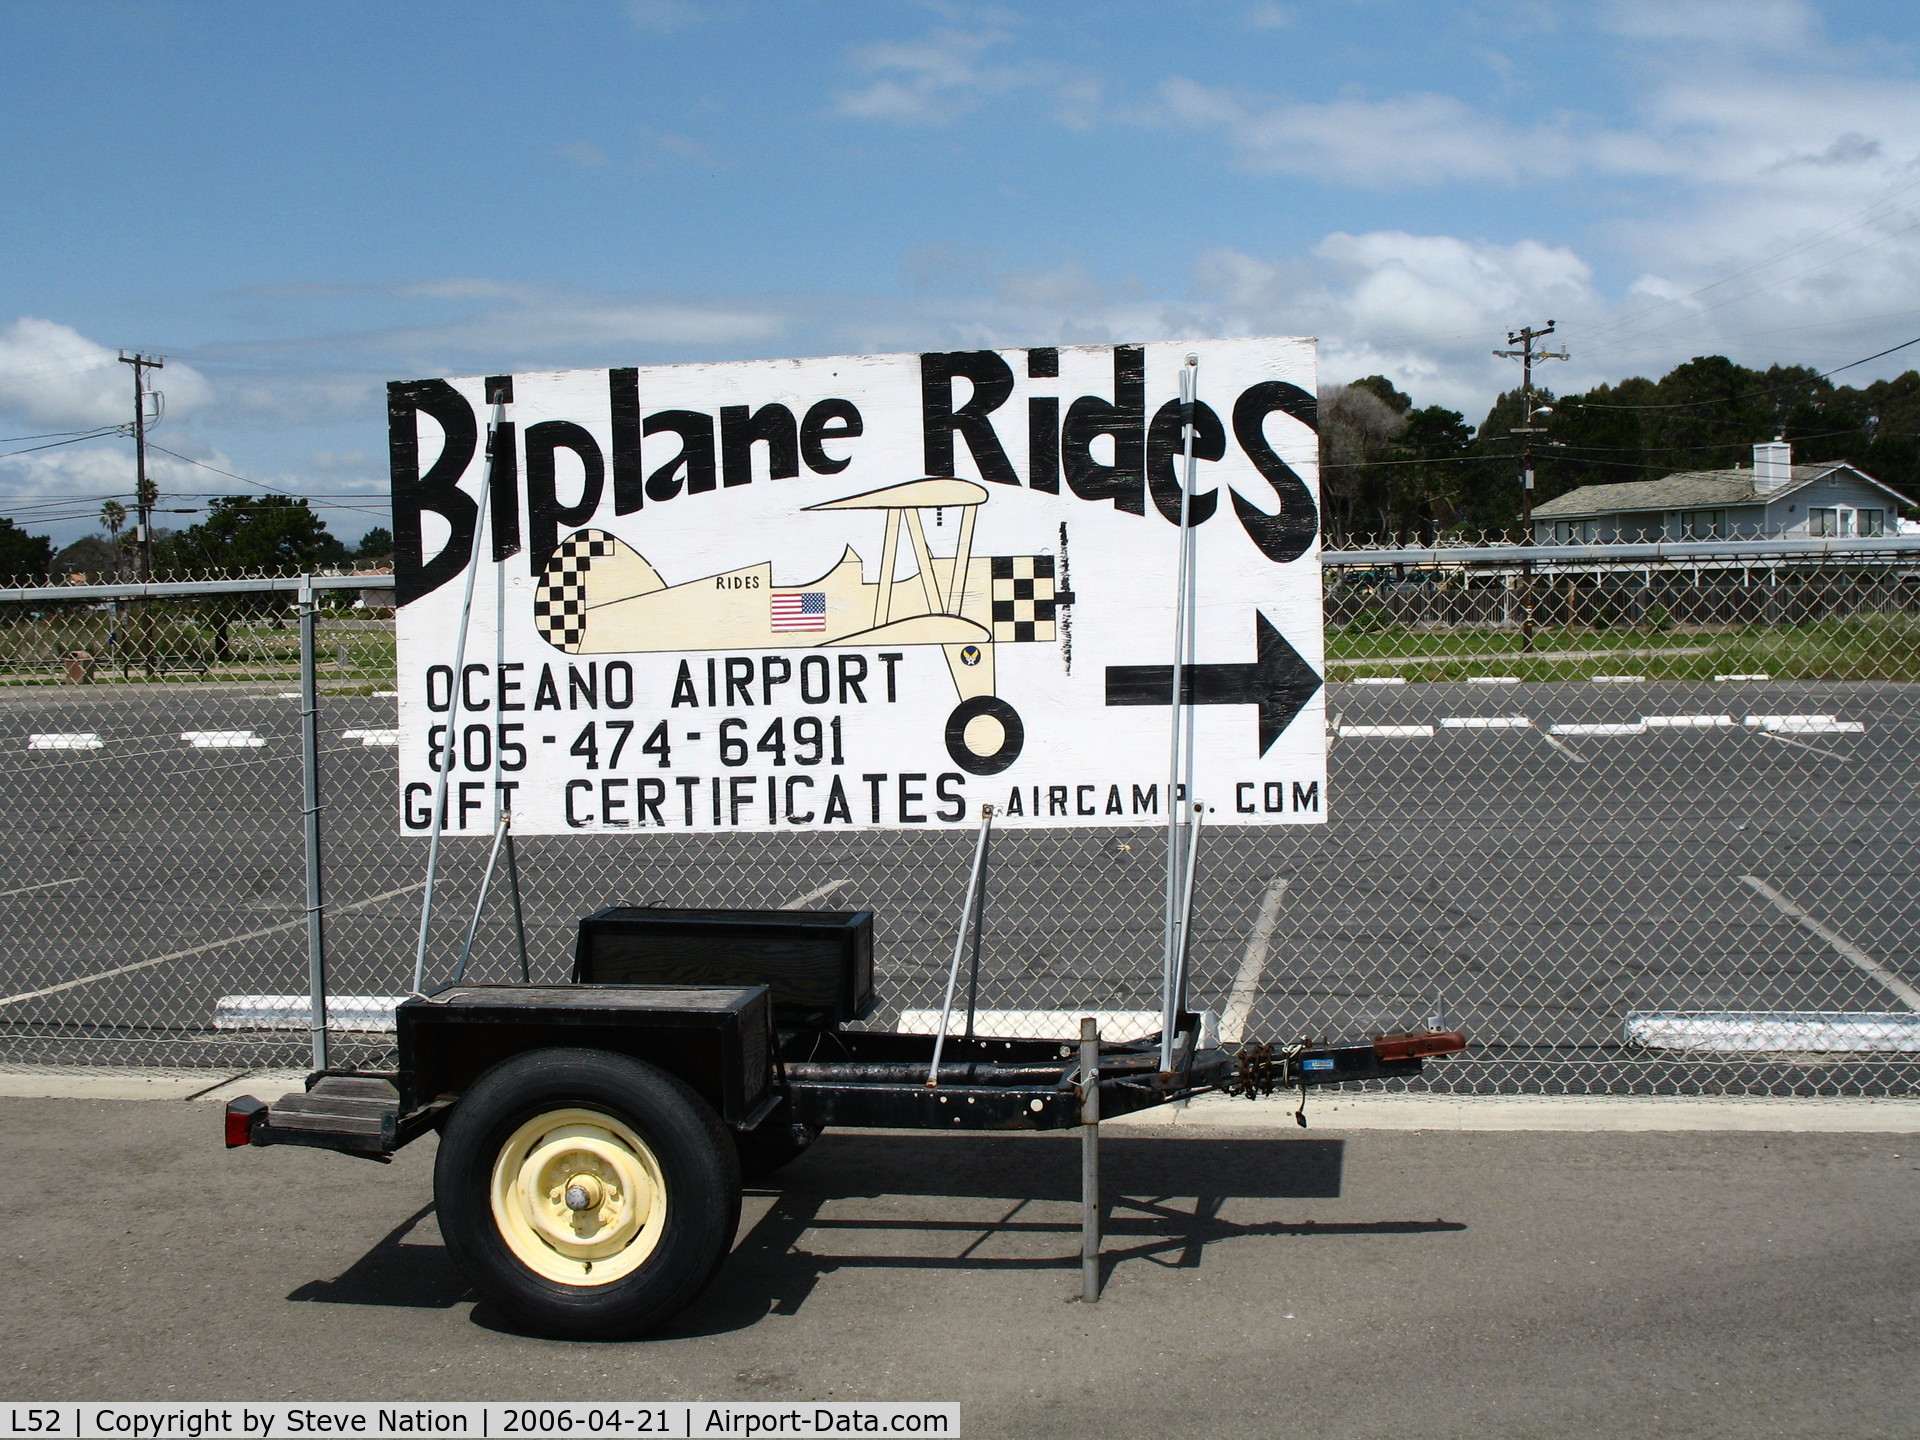 Oceano County Airport (L52) - Biplane Rides (yellow Stearman N4768V) sign @ Oceano County Airport, CA